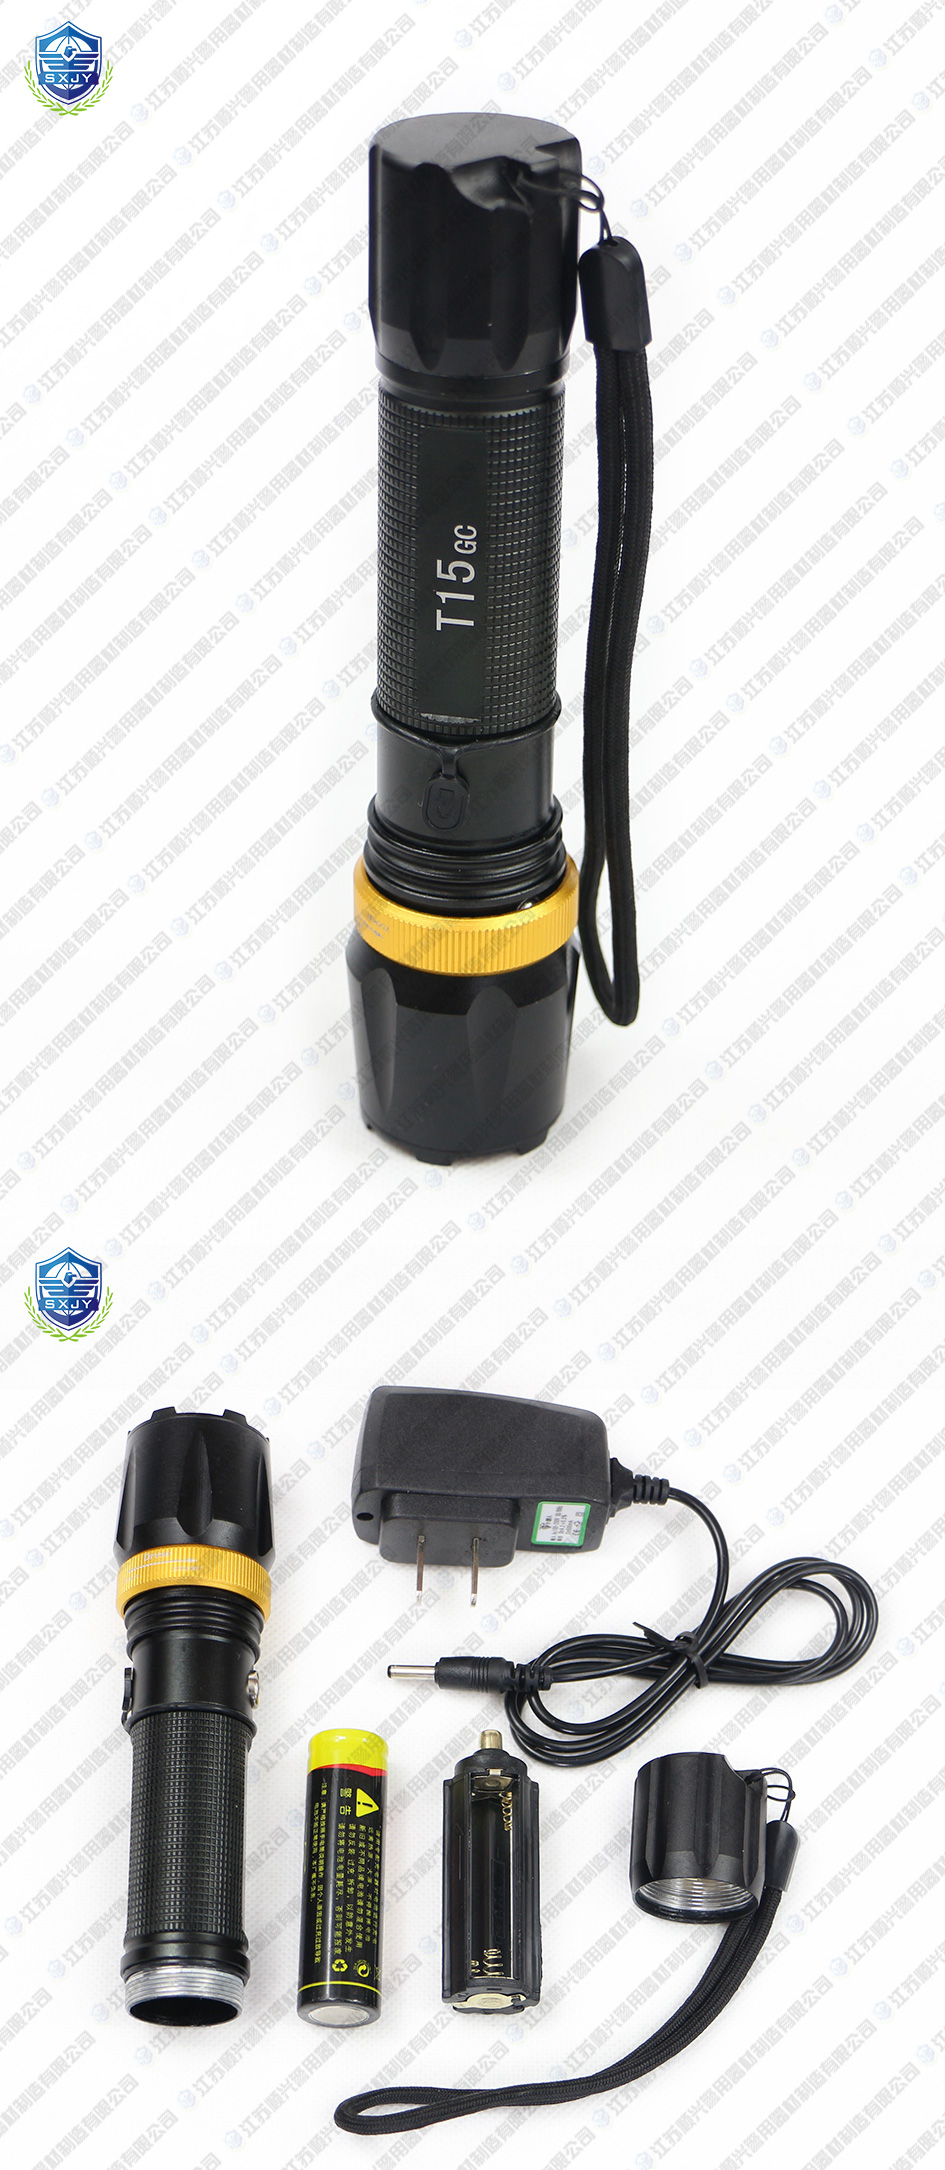 t15-20强光手电筒 - 照明器材 - 产品中心 - 顺兴警用